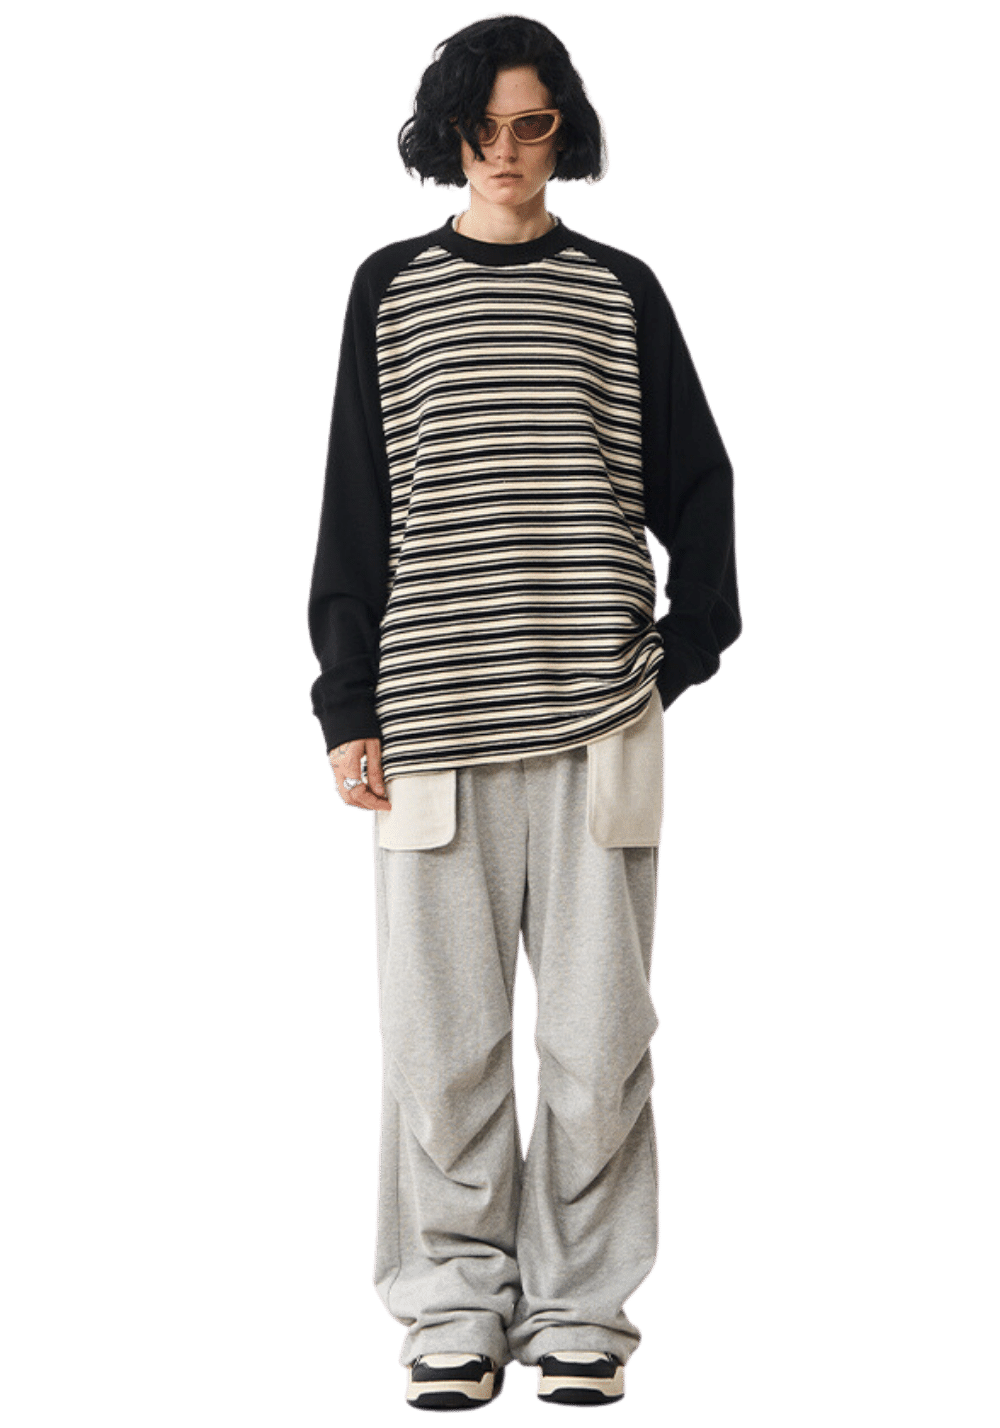 Striped Color Block Sweatershirt - PSYLOS 1, Striped Color Block Sweatershirt, Sweatshirts, MODITEC, PSYLOS 1